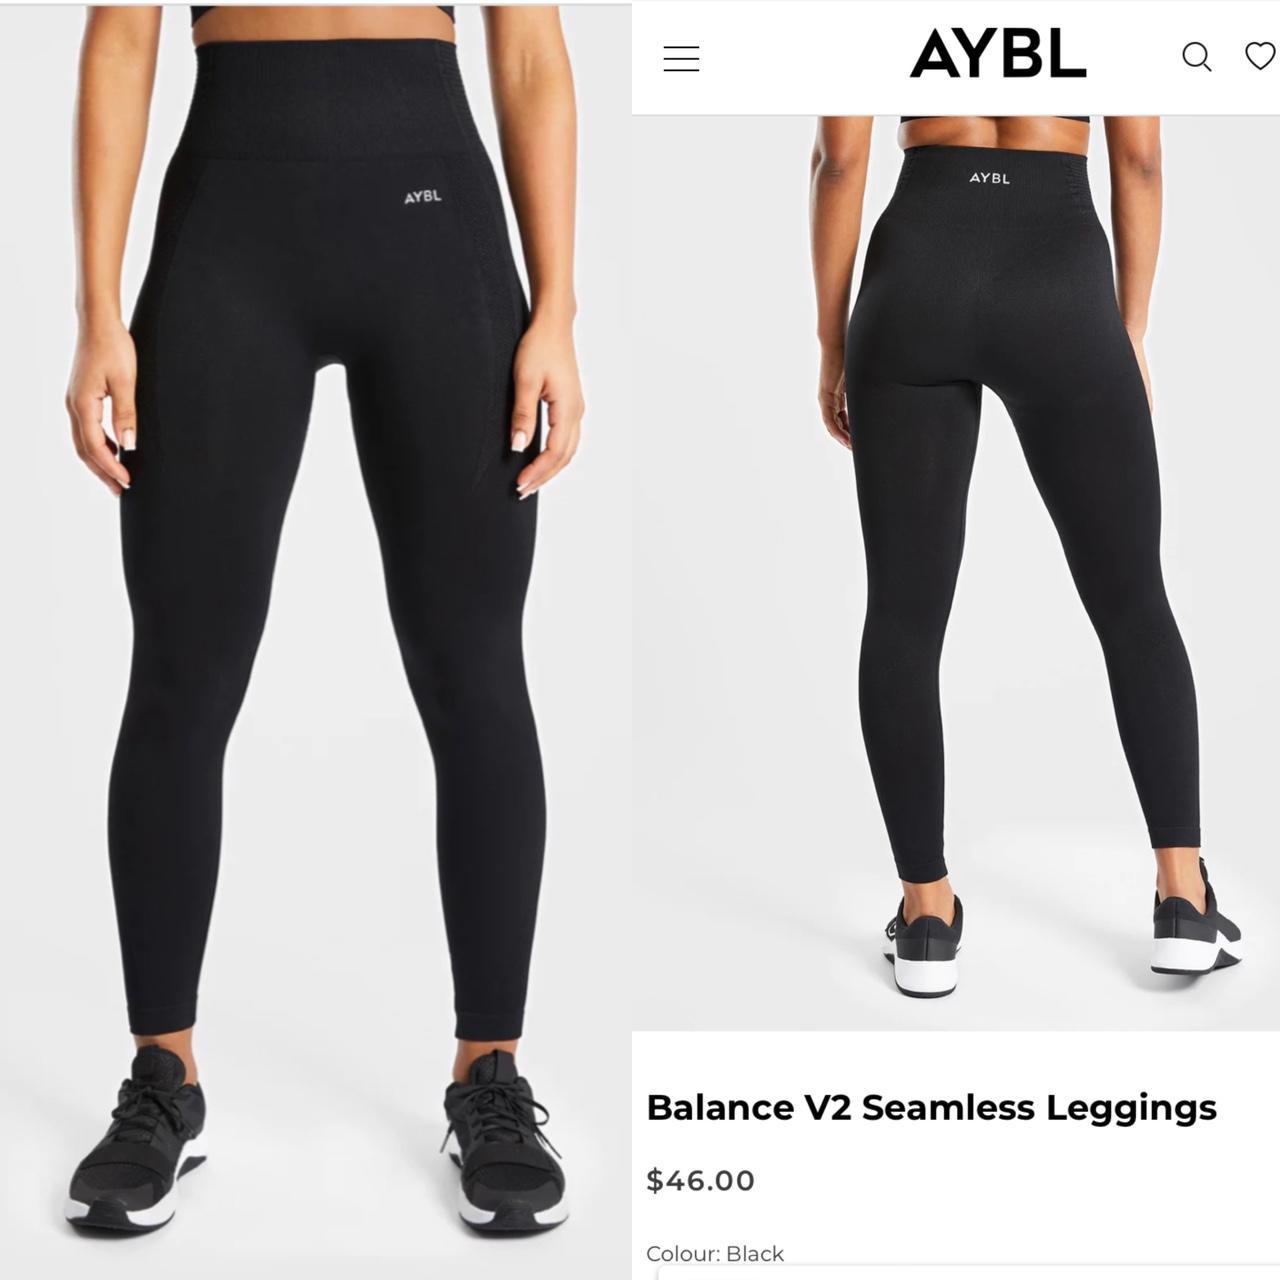 AYBL Balance V2 Seamless Leggings